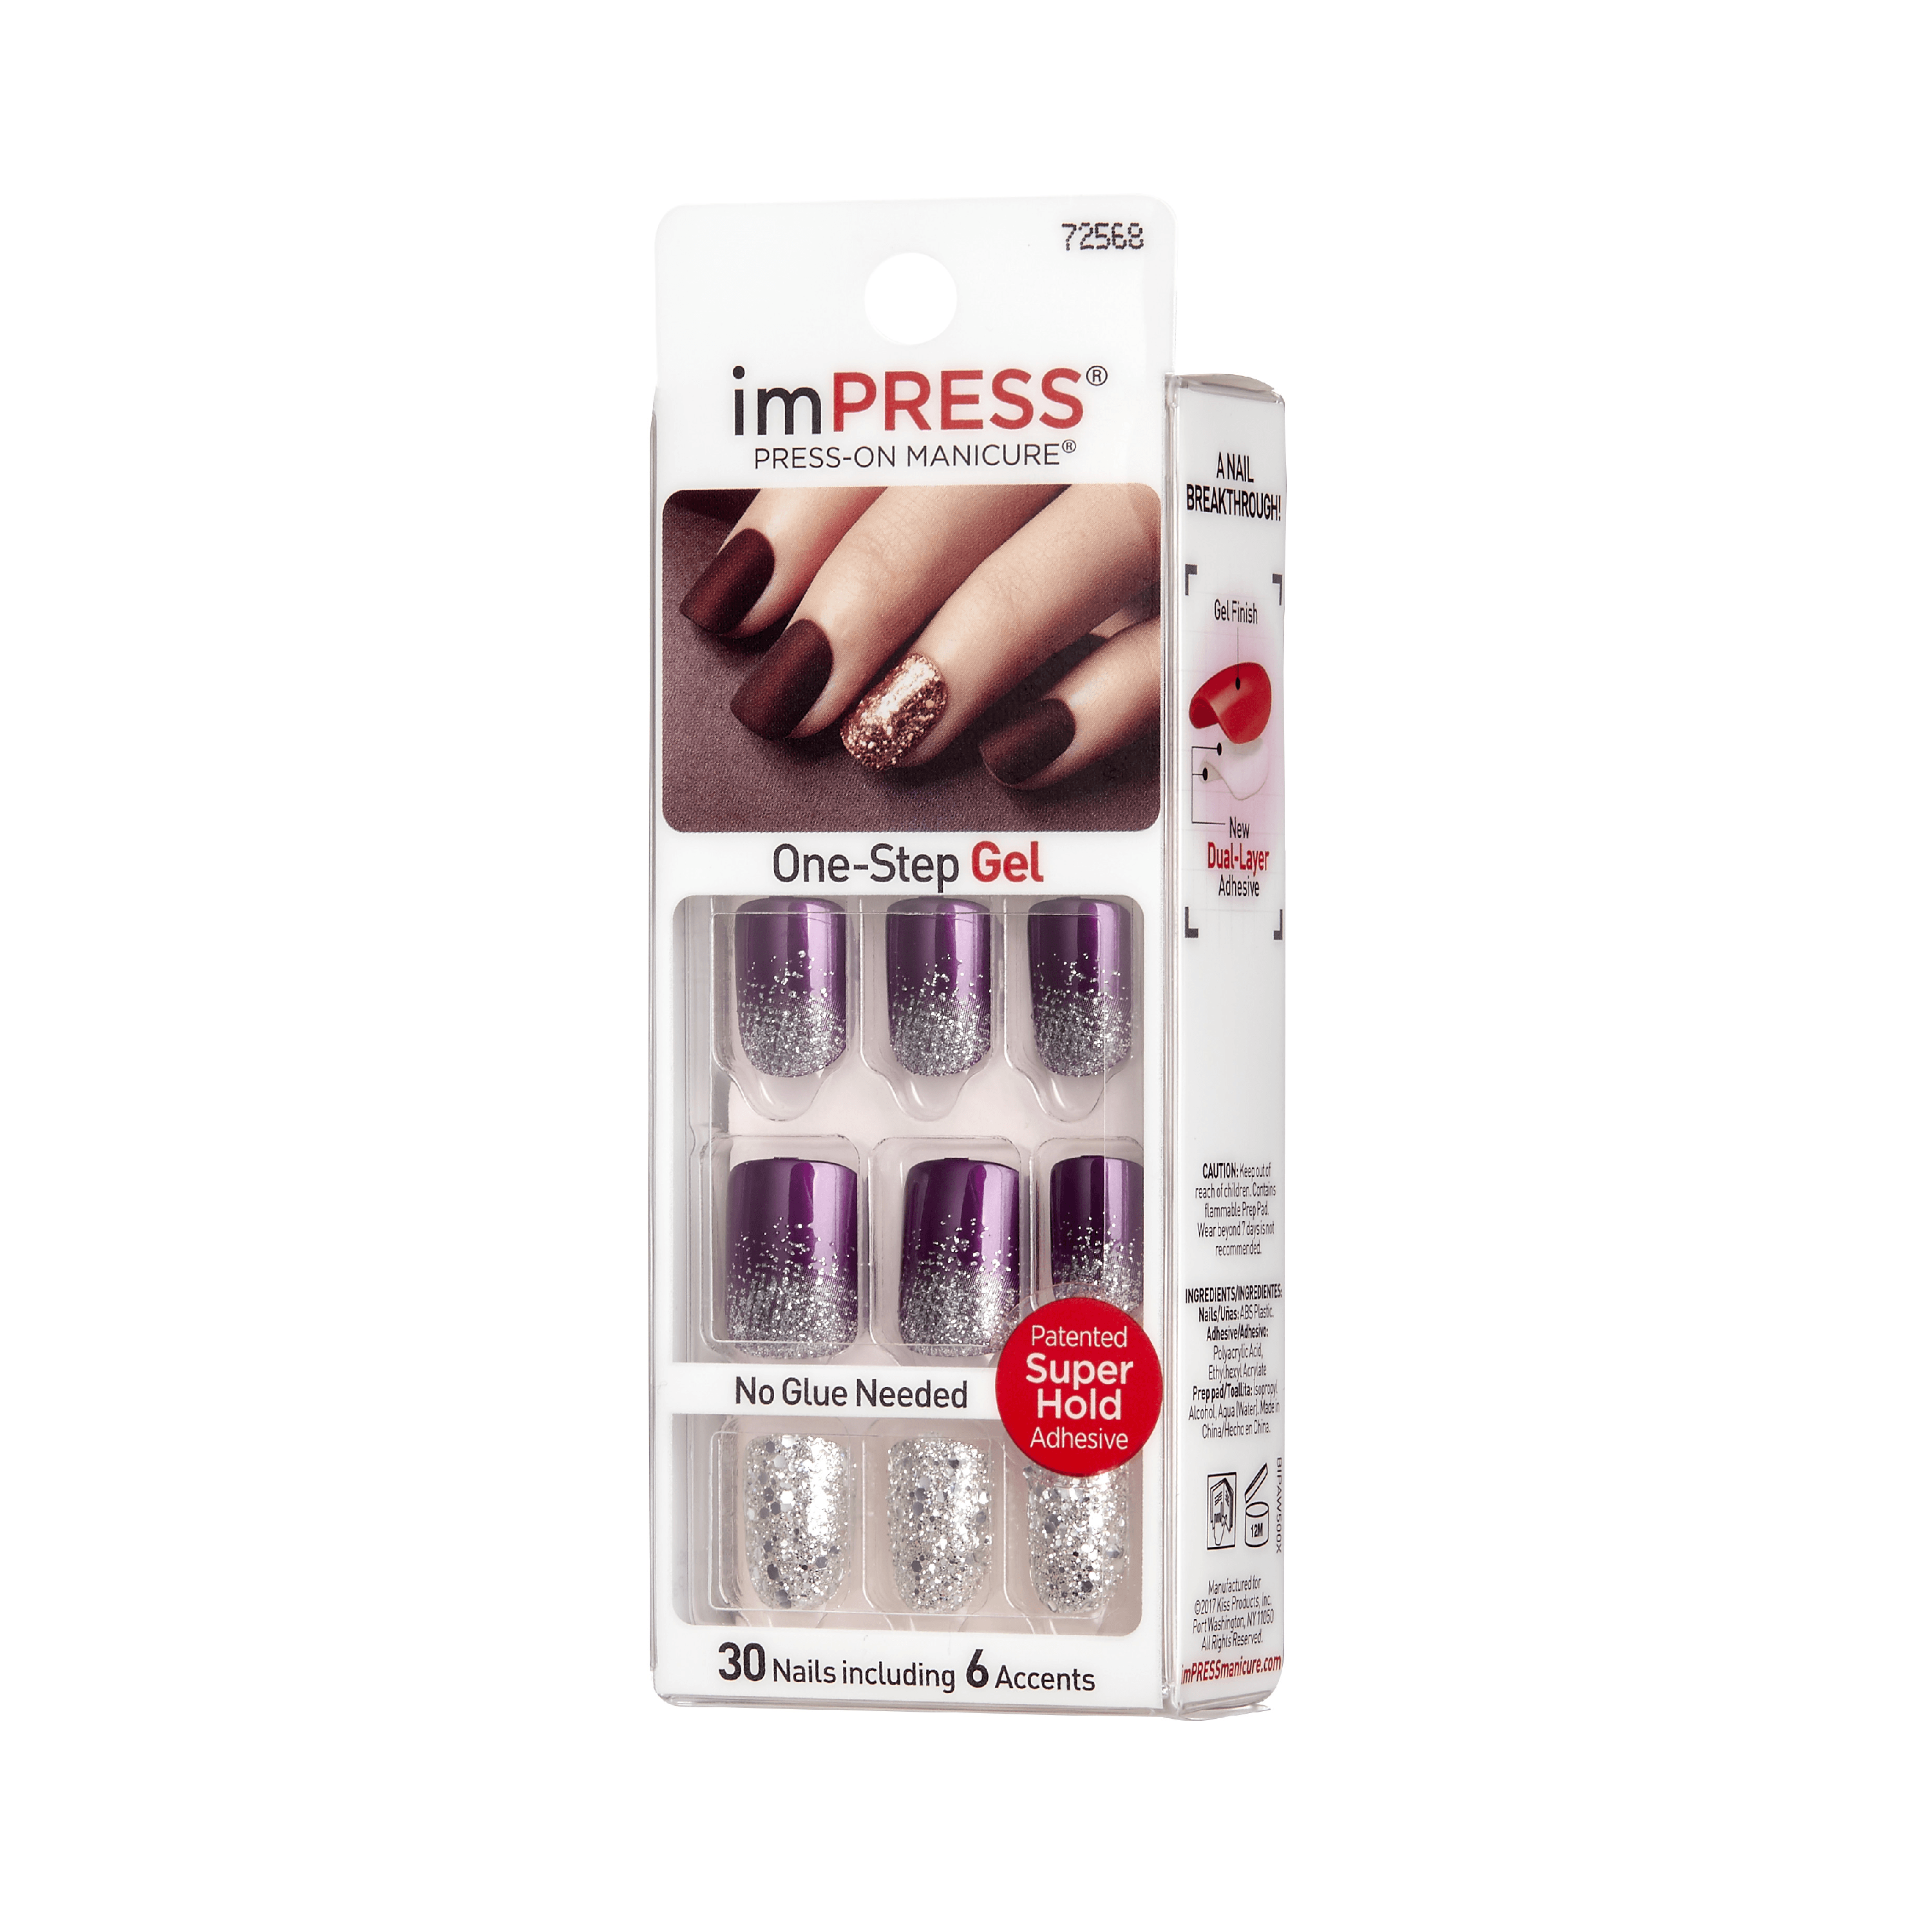 ImPRESS Press-on Nails Gel Manicure - Harlem Shake - image 1 of 2